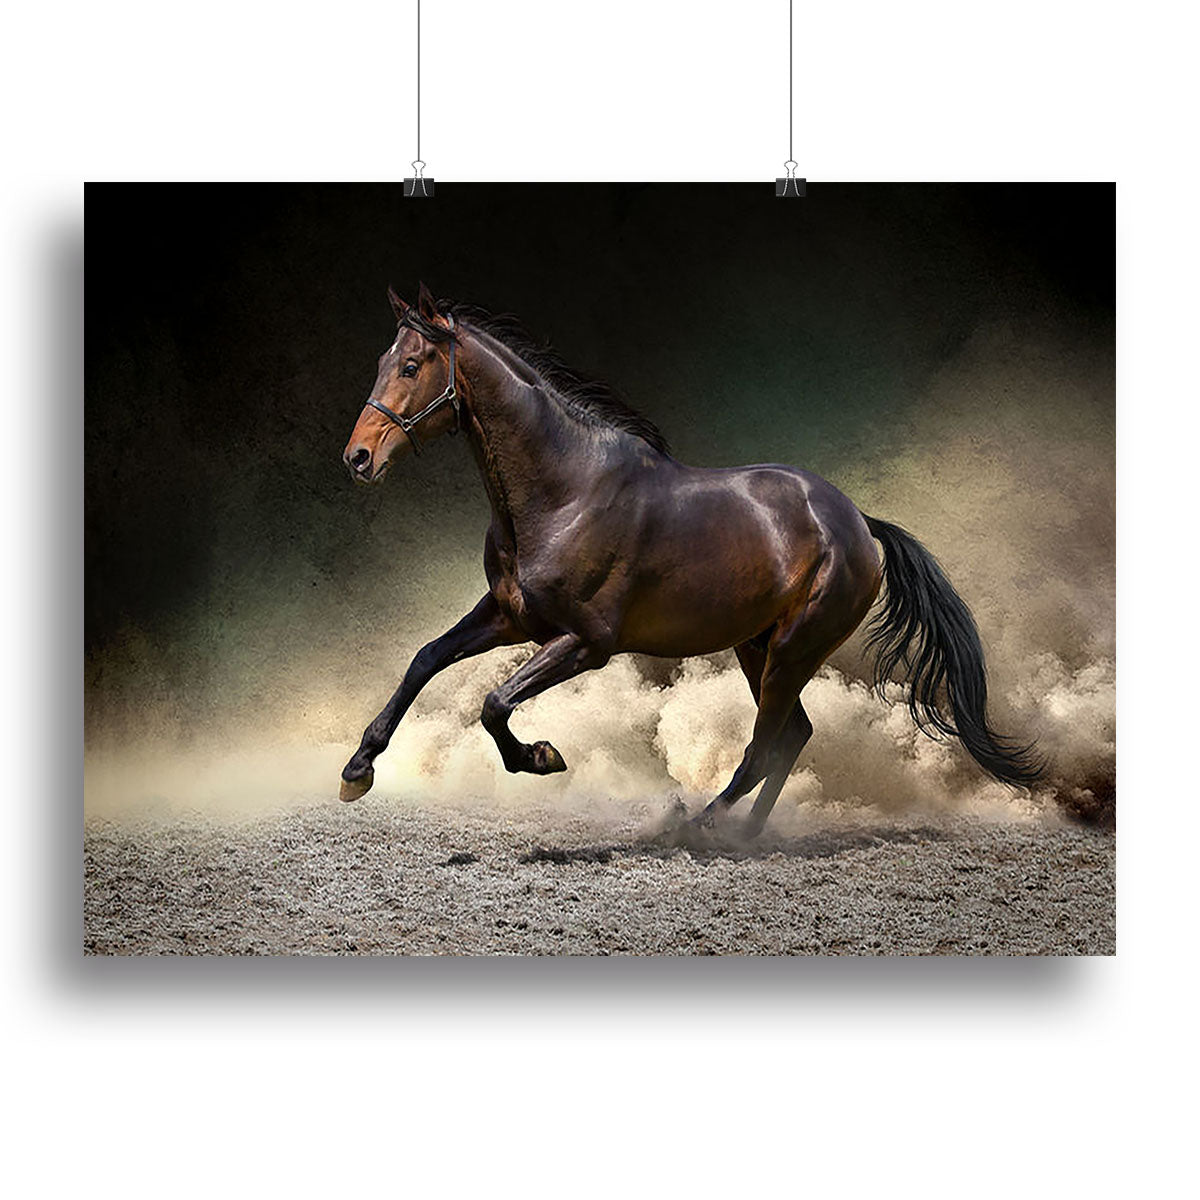 Black horse run gallop in dust desert Canvas Print or Poster - Canvas Art Rocks - 2